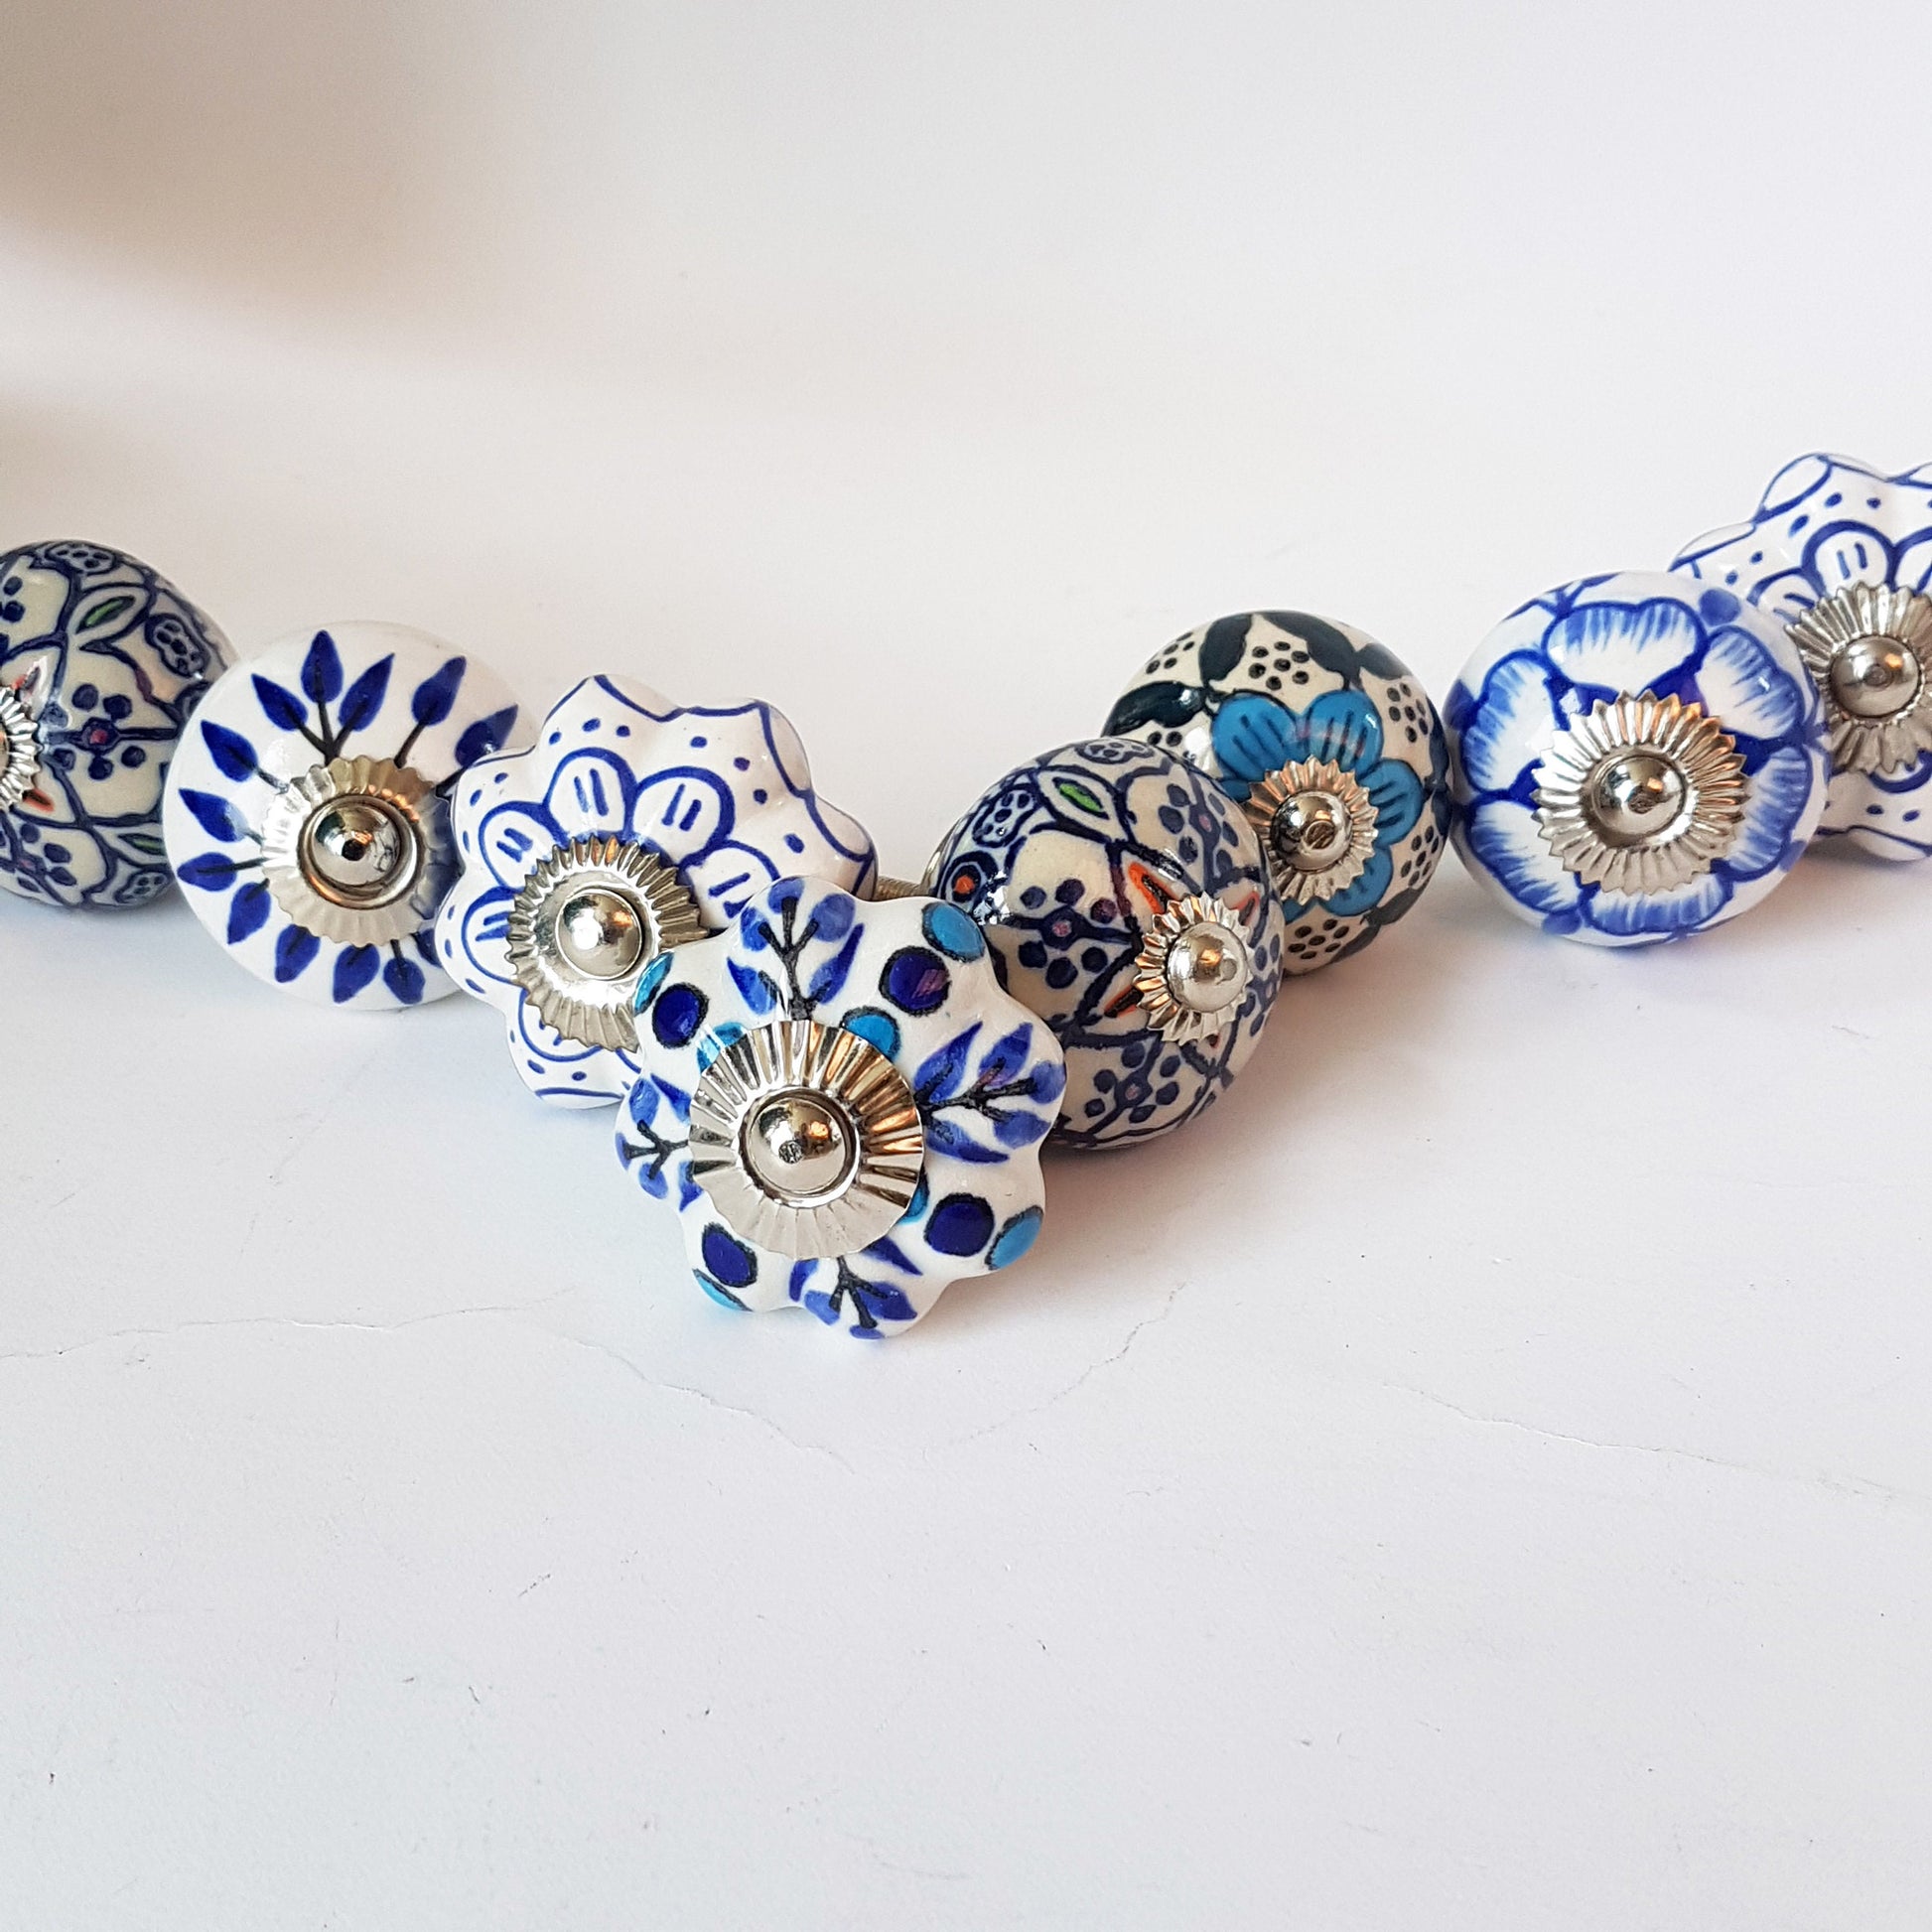 Delphine set of 8 cabinet knob drawer pulls. Designer collection in classic Delft Dutch blue & white floral patterns.  Easy DIY decor fix! - Vintage India Ca